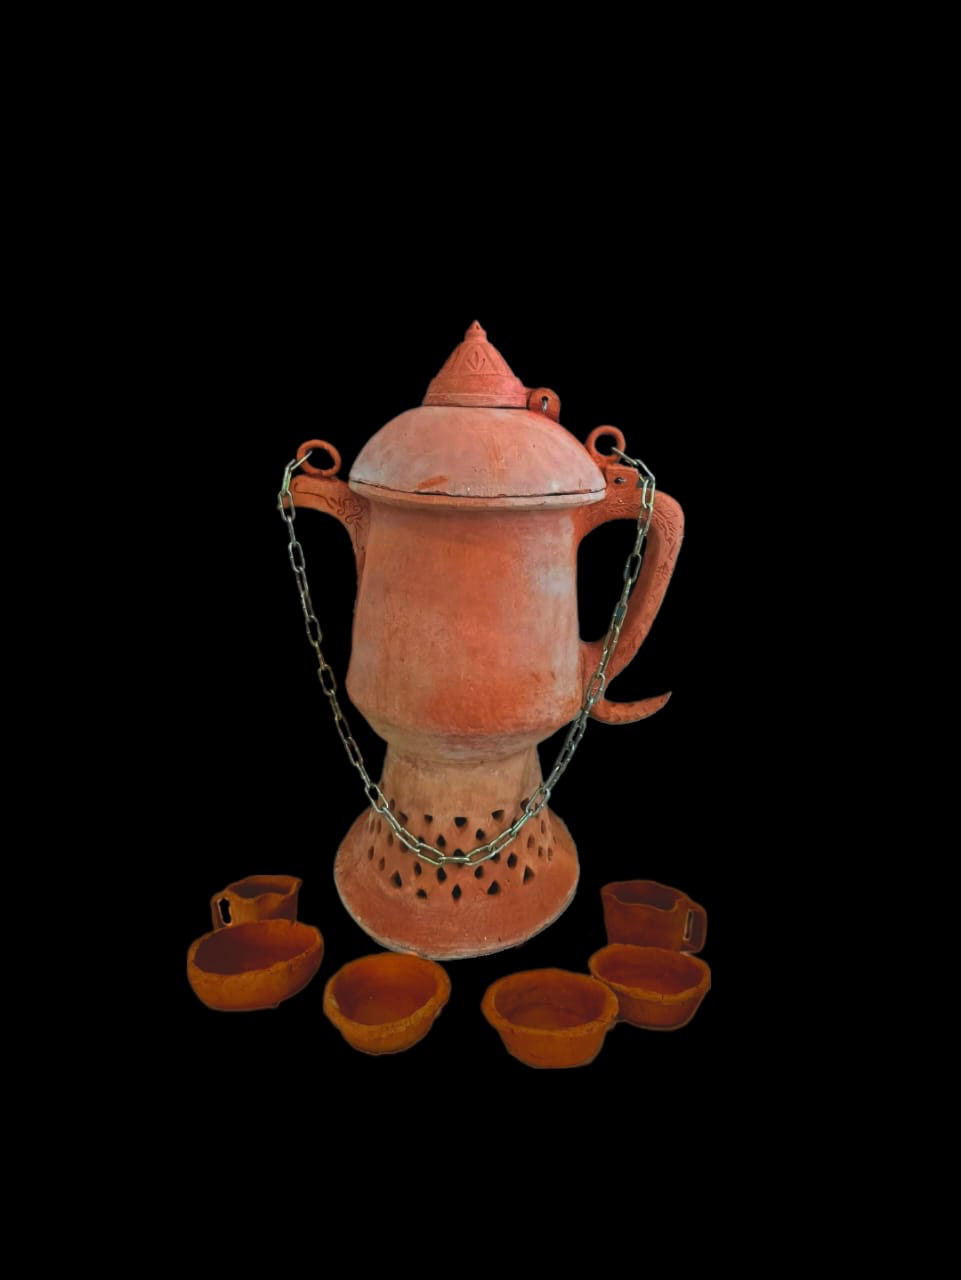 clay terracotta heritage traditional culture kashmiri Tea kattle